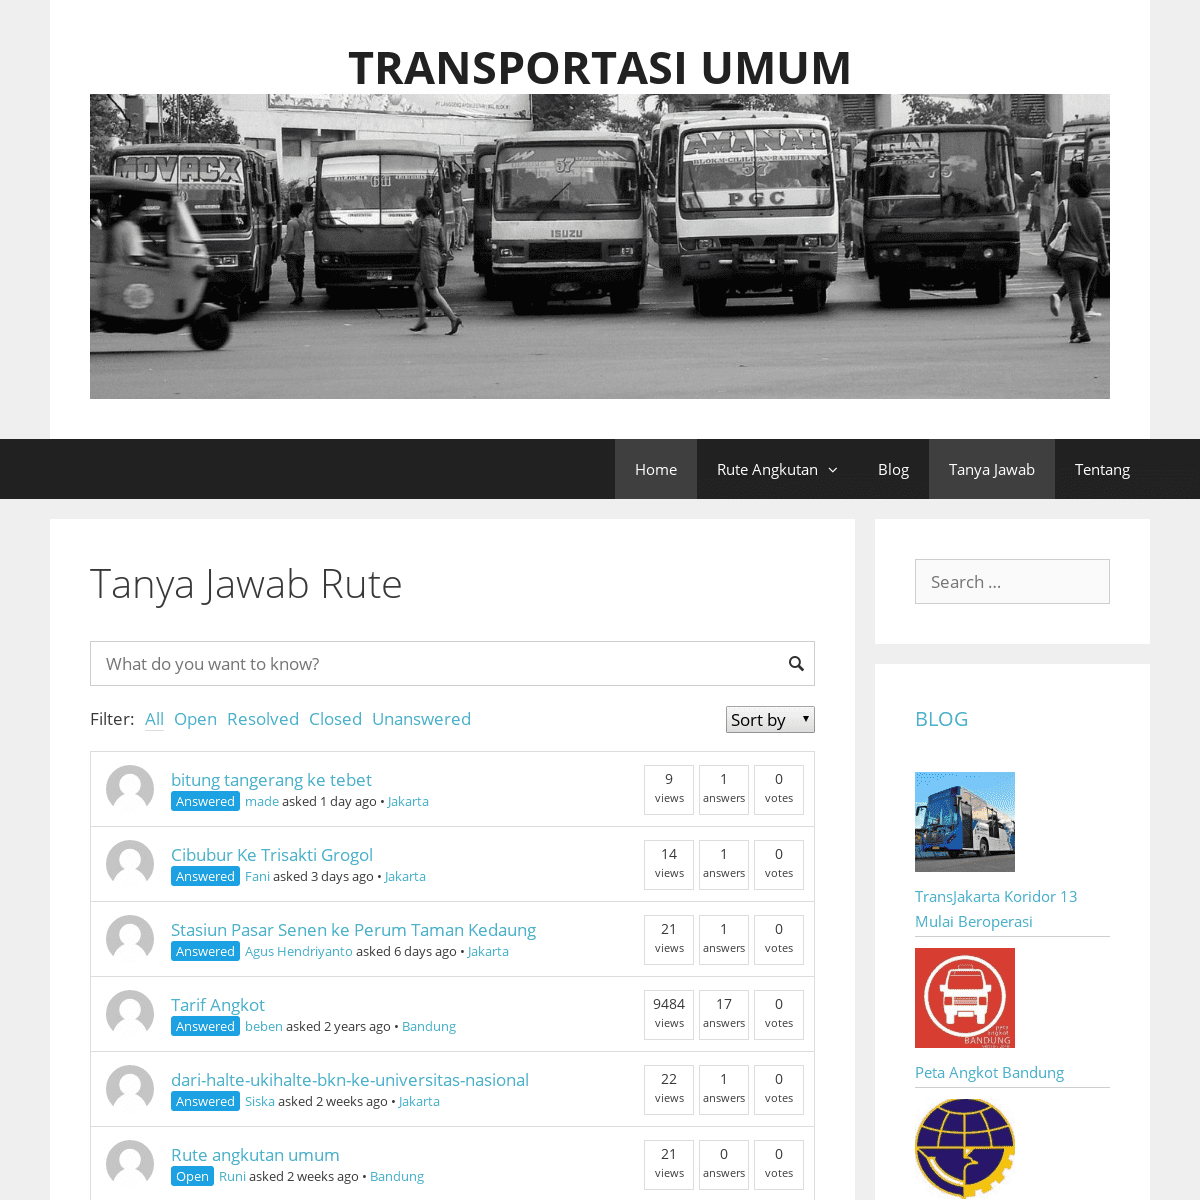 A complete backup of transportasiumum.com